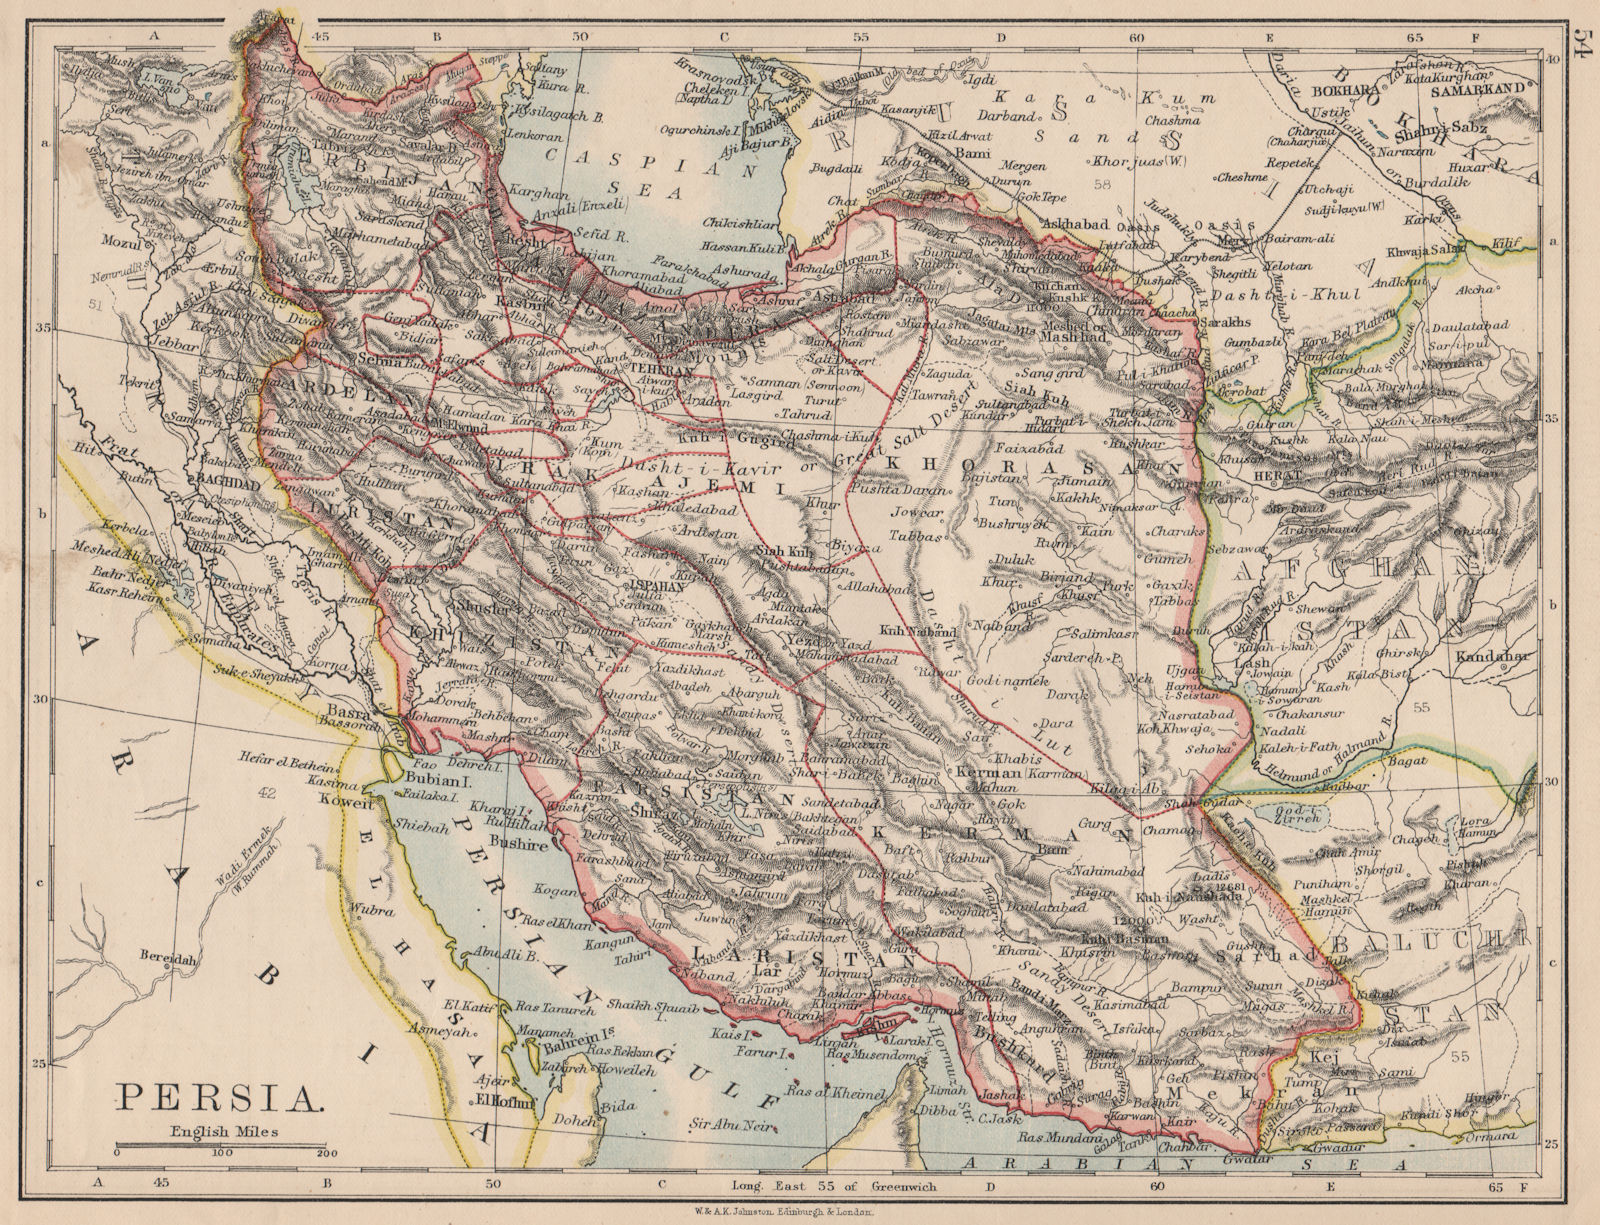 PERSIA. Showing provinces. Iran. Persian Gulf. Bushire.  JOHNSTON 1895 old map